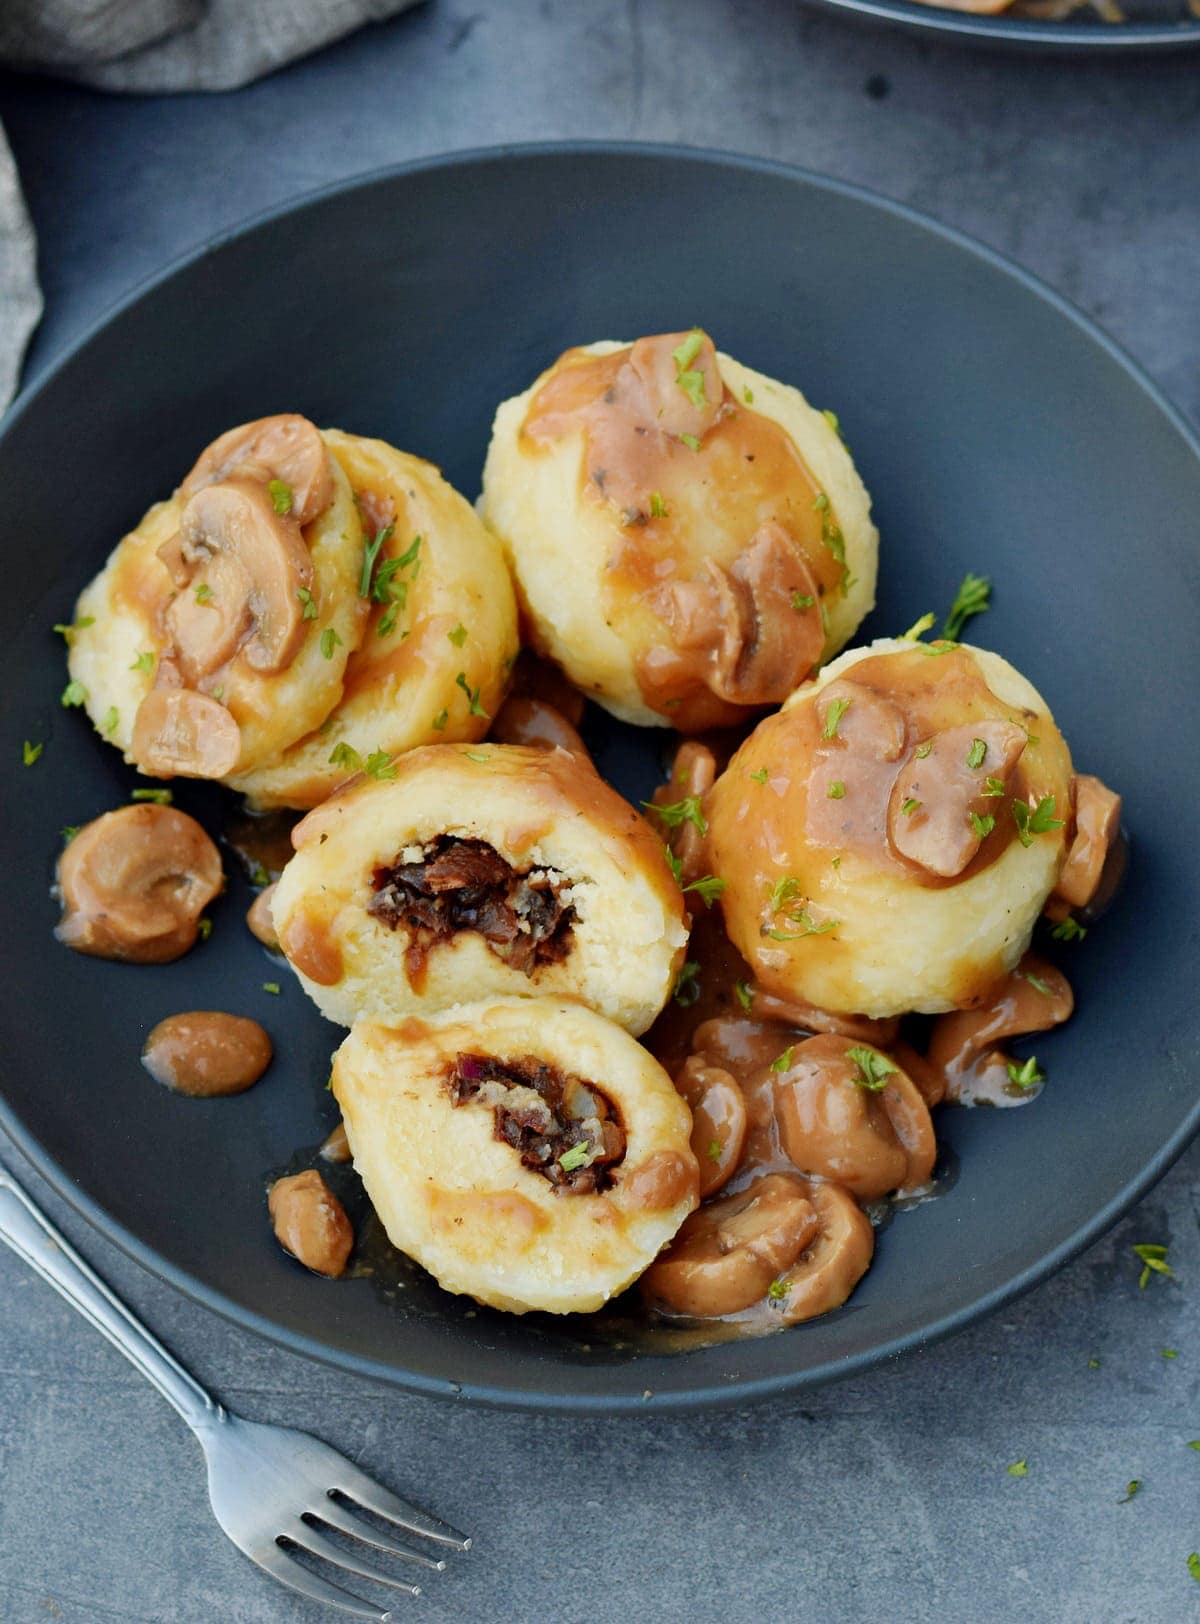 stuffed Kartoffelkloesse in a bowl with mushroom gravy